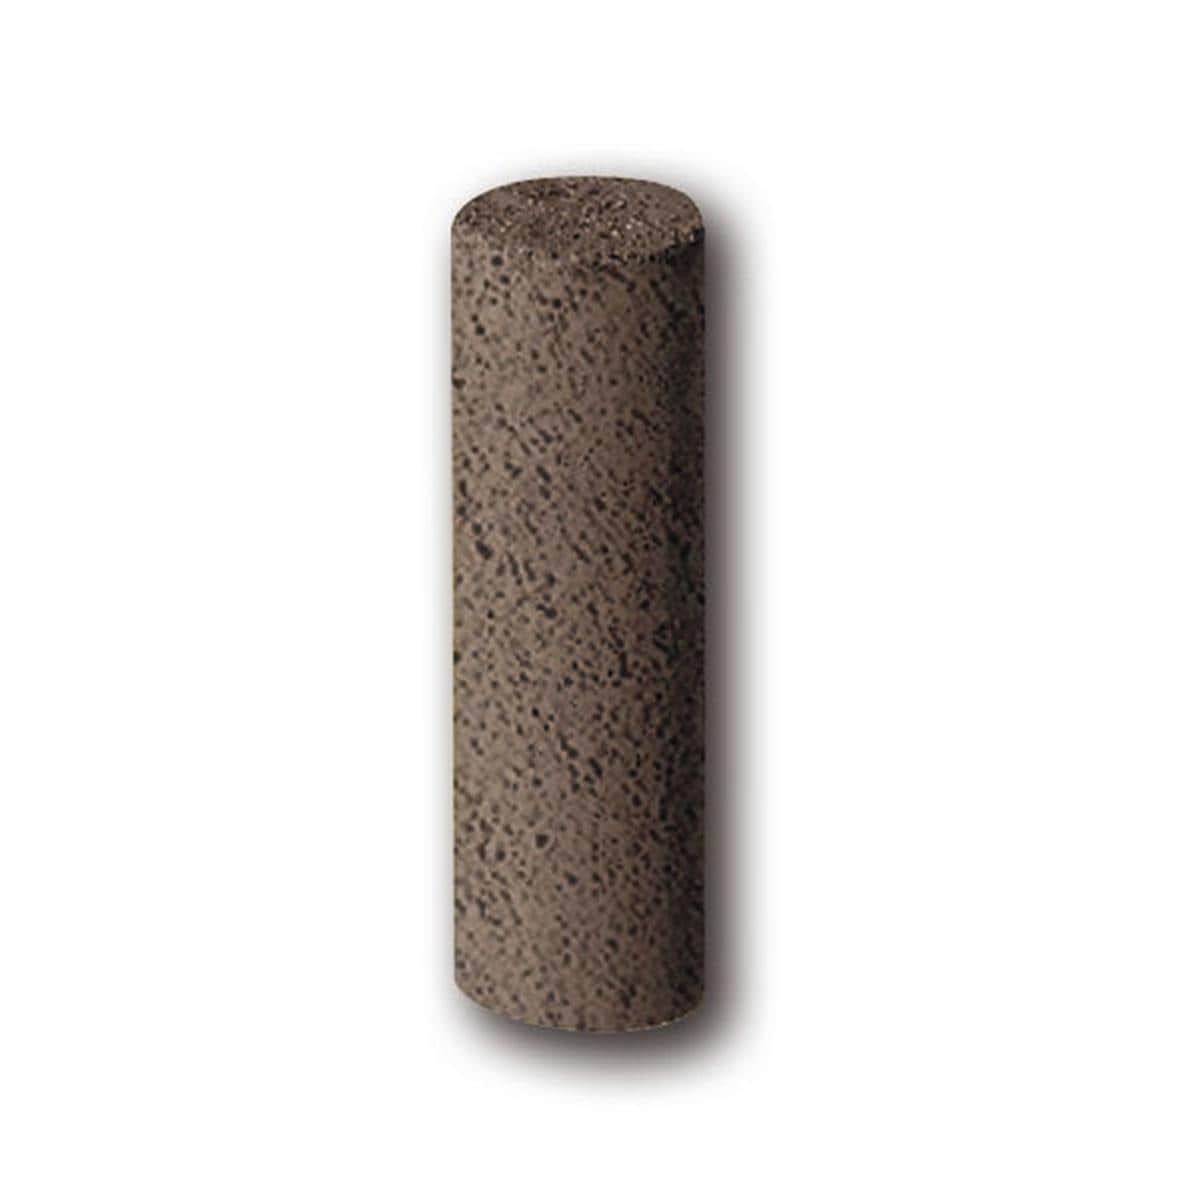 HS-Chrom-Kobalt-Polierer, Labochrom - Zylinder, braun, Ø 6 x 22 mm, Packung 100 Stück